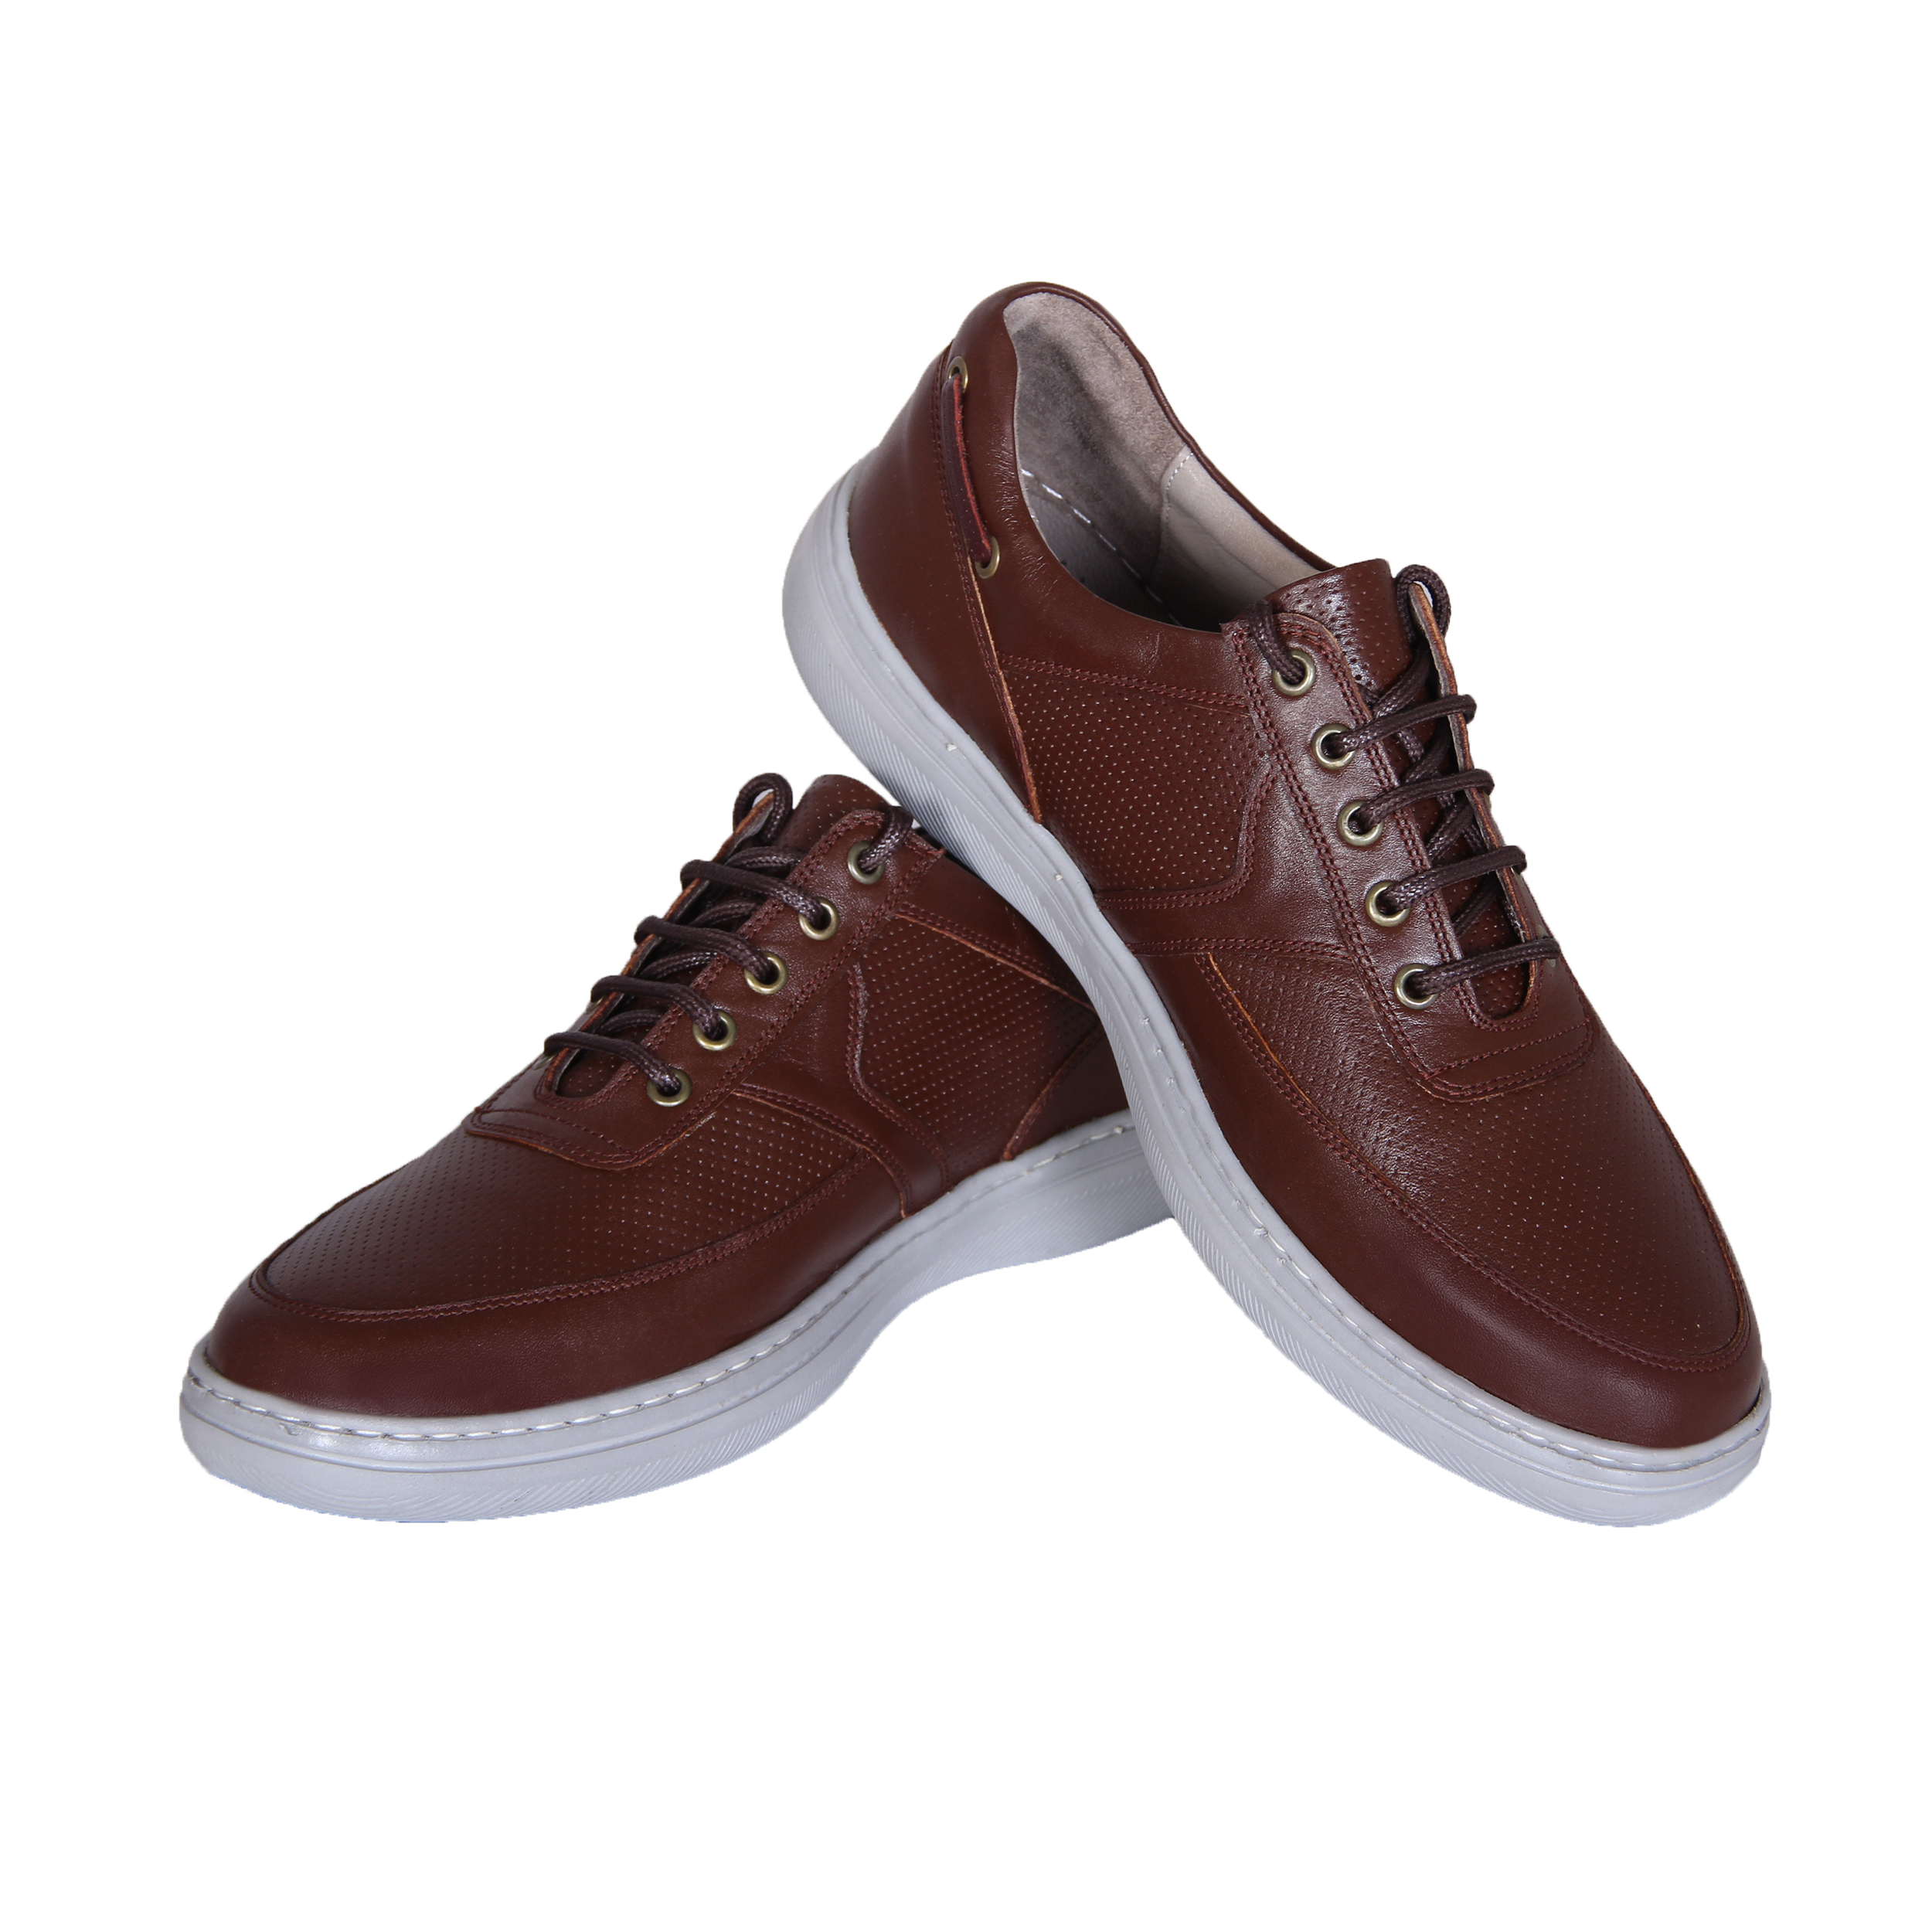 SHAHRECHARM leather men's casual shoes , F6054-3 Model